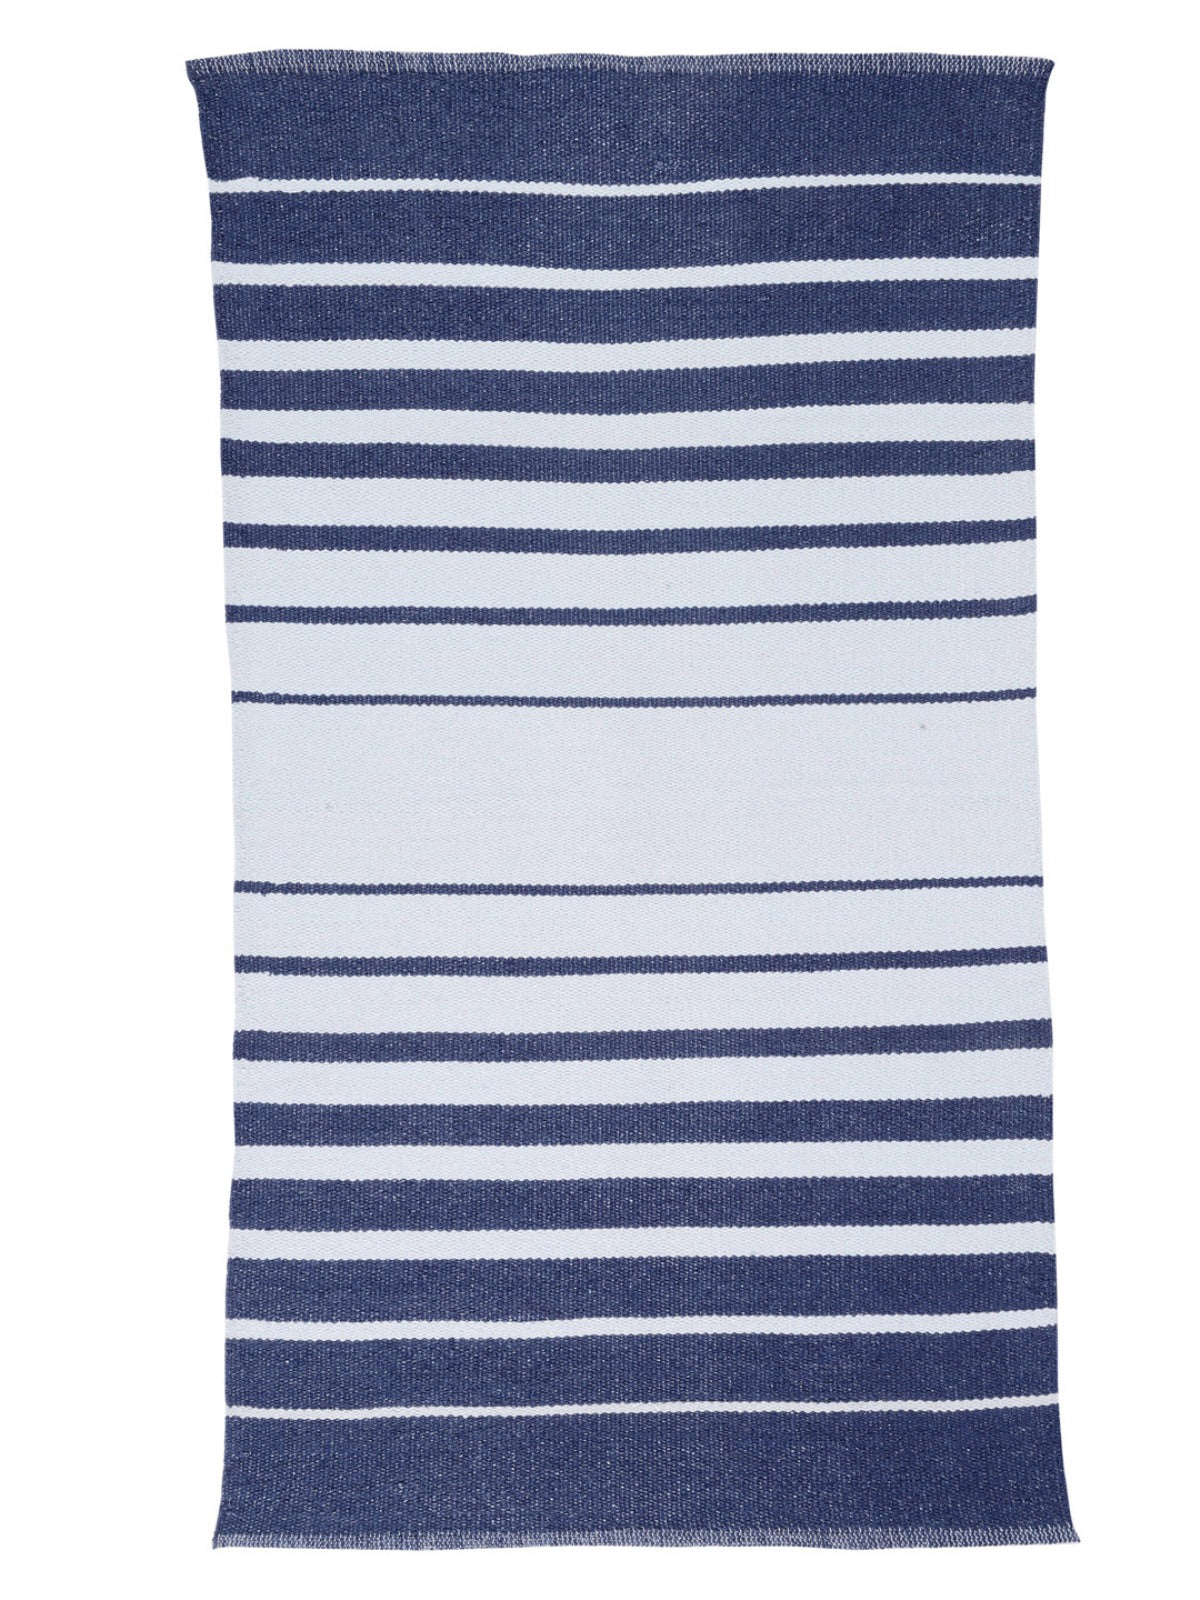 Blue & White 3 ft x 5 ft Stripes Patterned Dhurrie